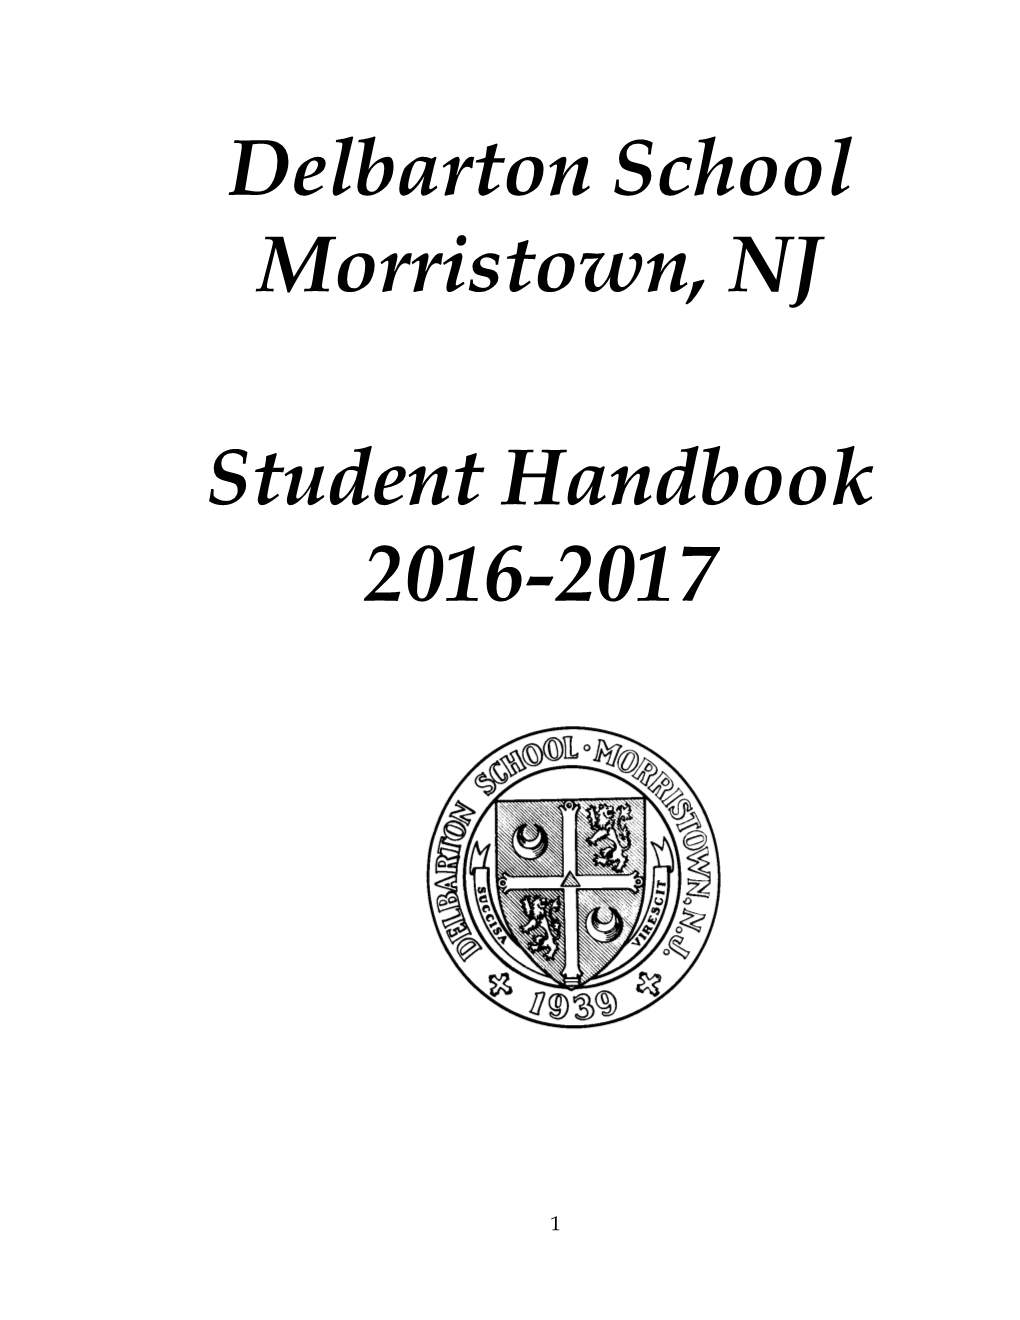 Delbarton School Morristown, NJ Student Handbook 2016-2017